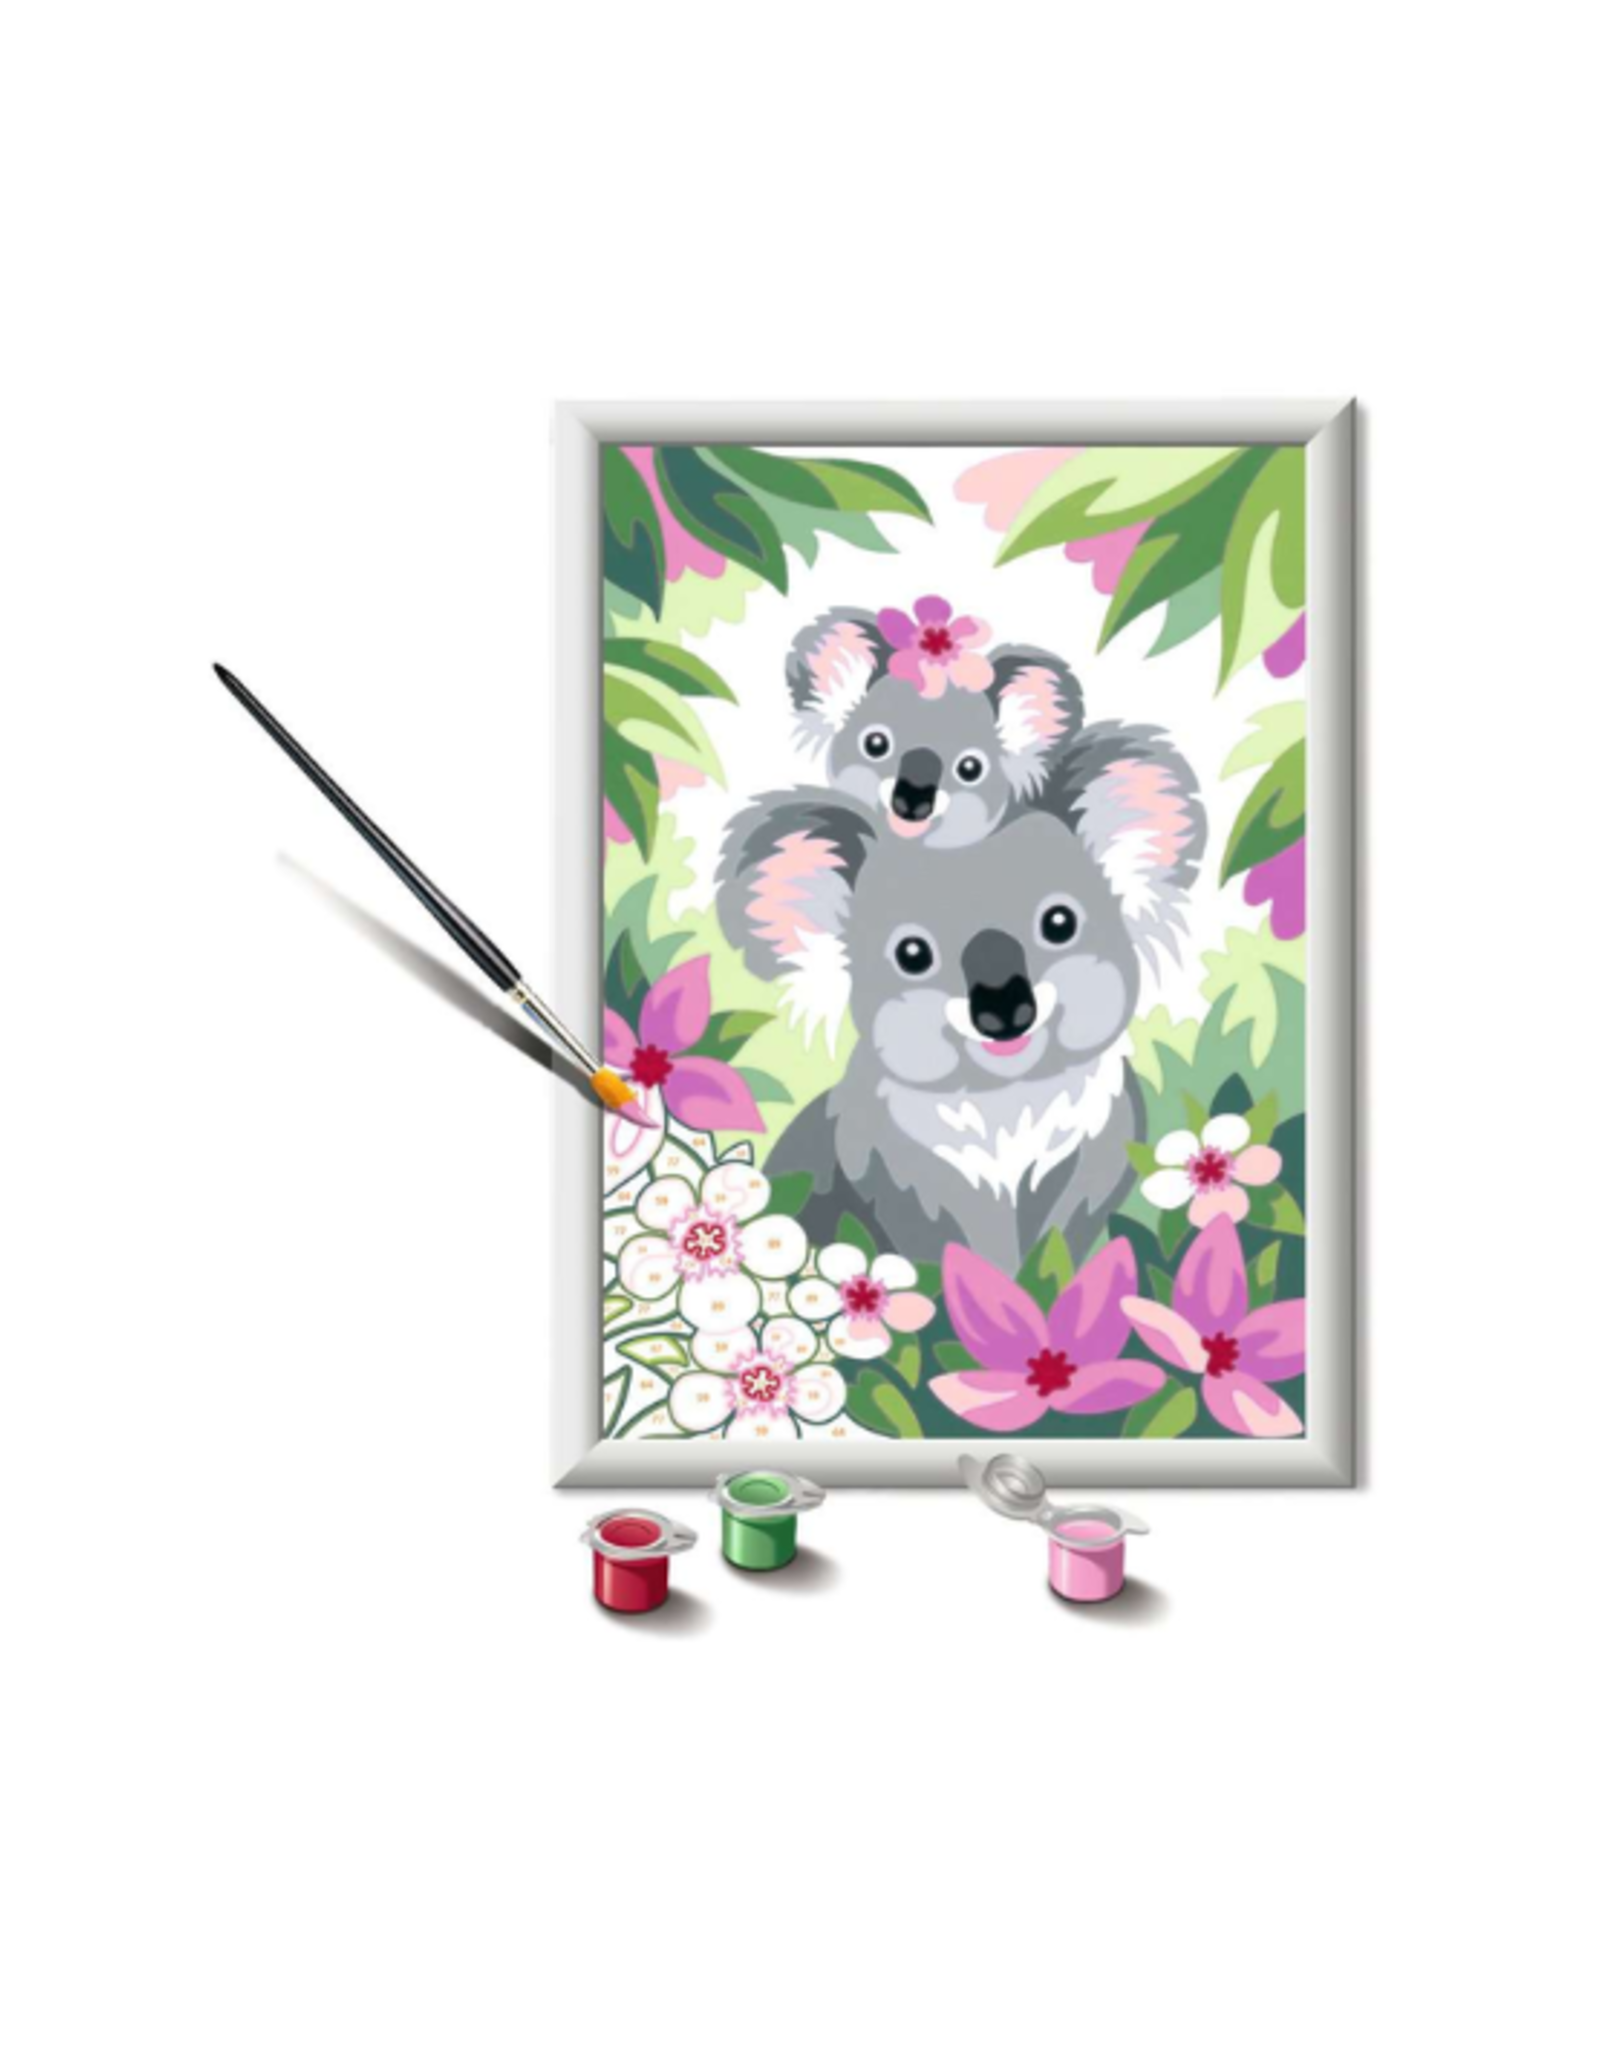 Ravensburger Ravensburger - CreArt Kids - Koala Cuties